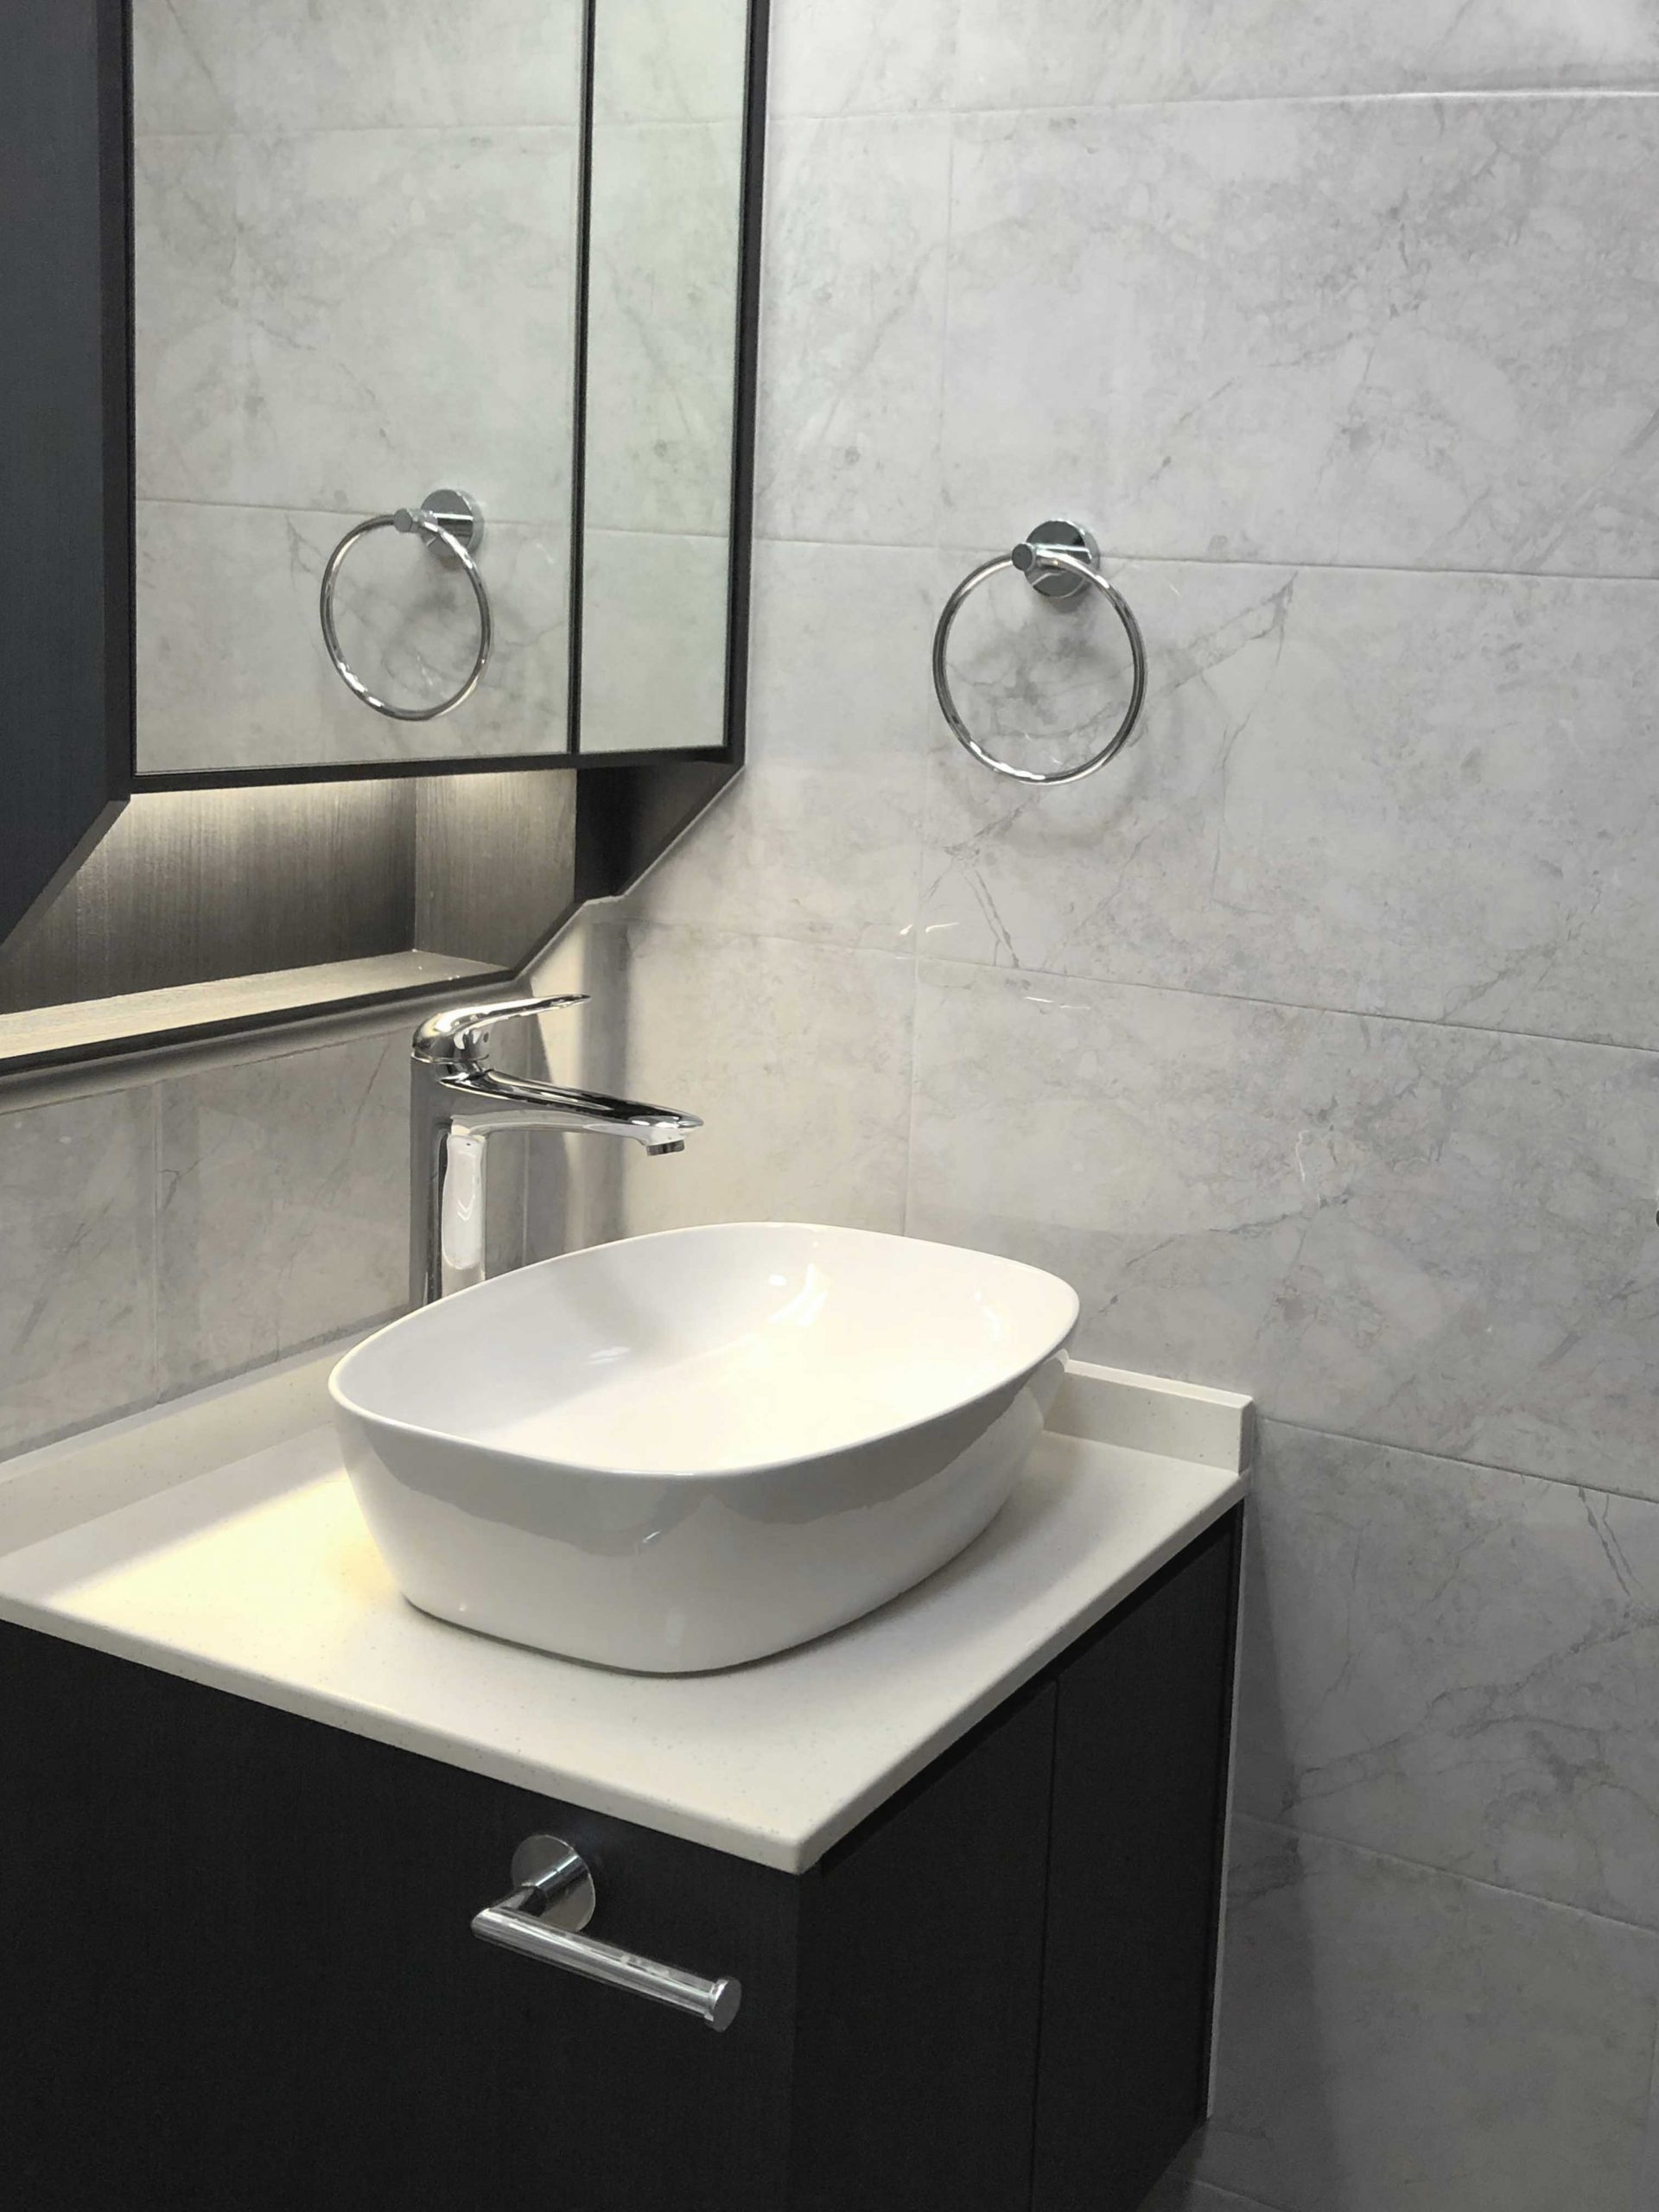 HDB resale toilet design vanity marble counter top monochrome overmount sink